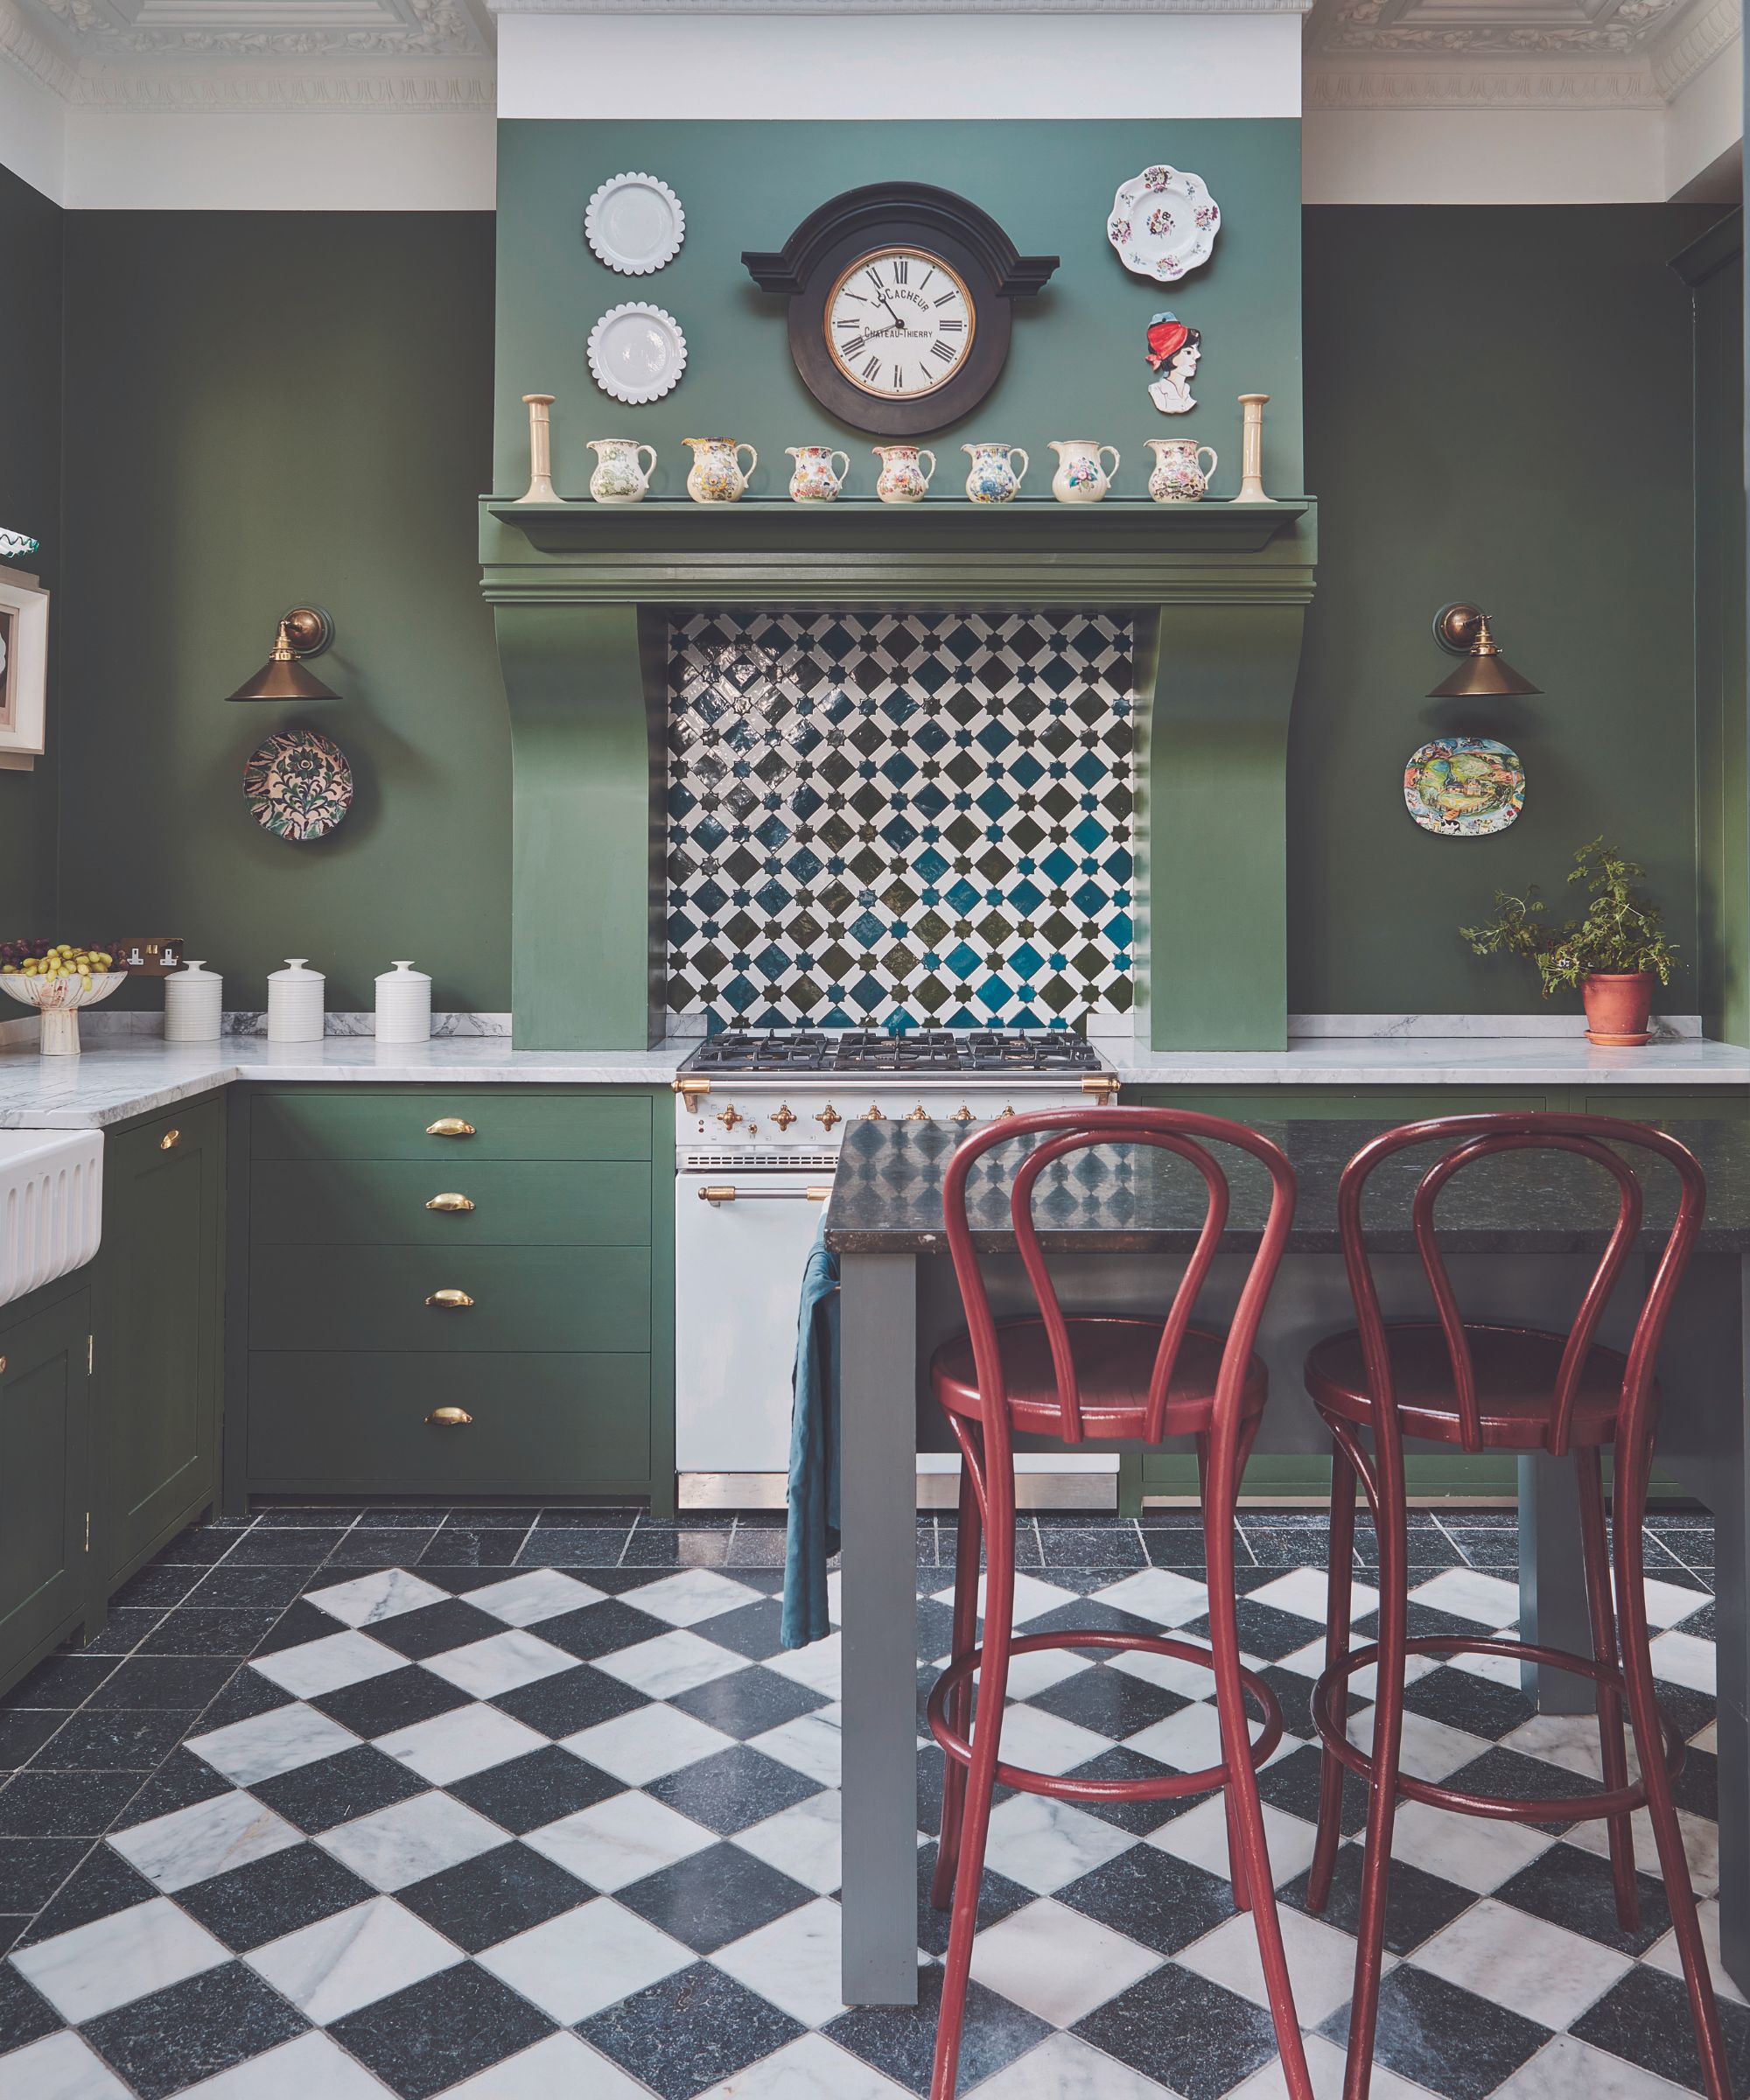 Green kitchen with checkerboard flooring